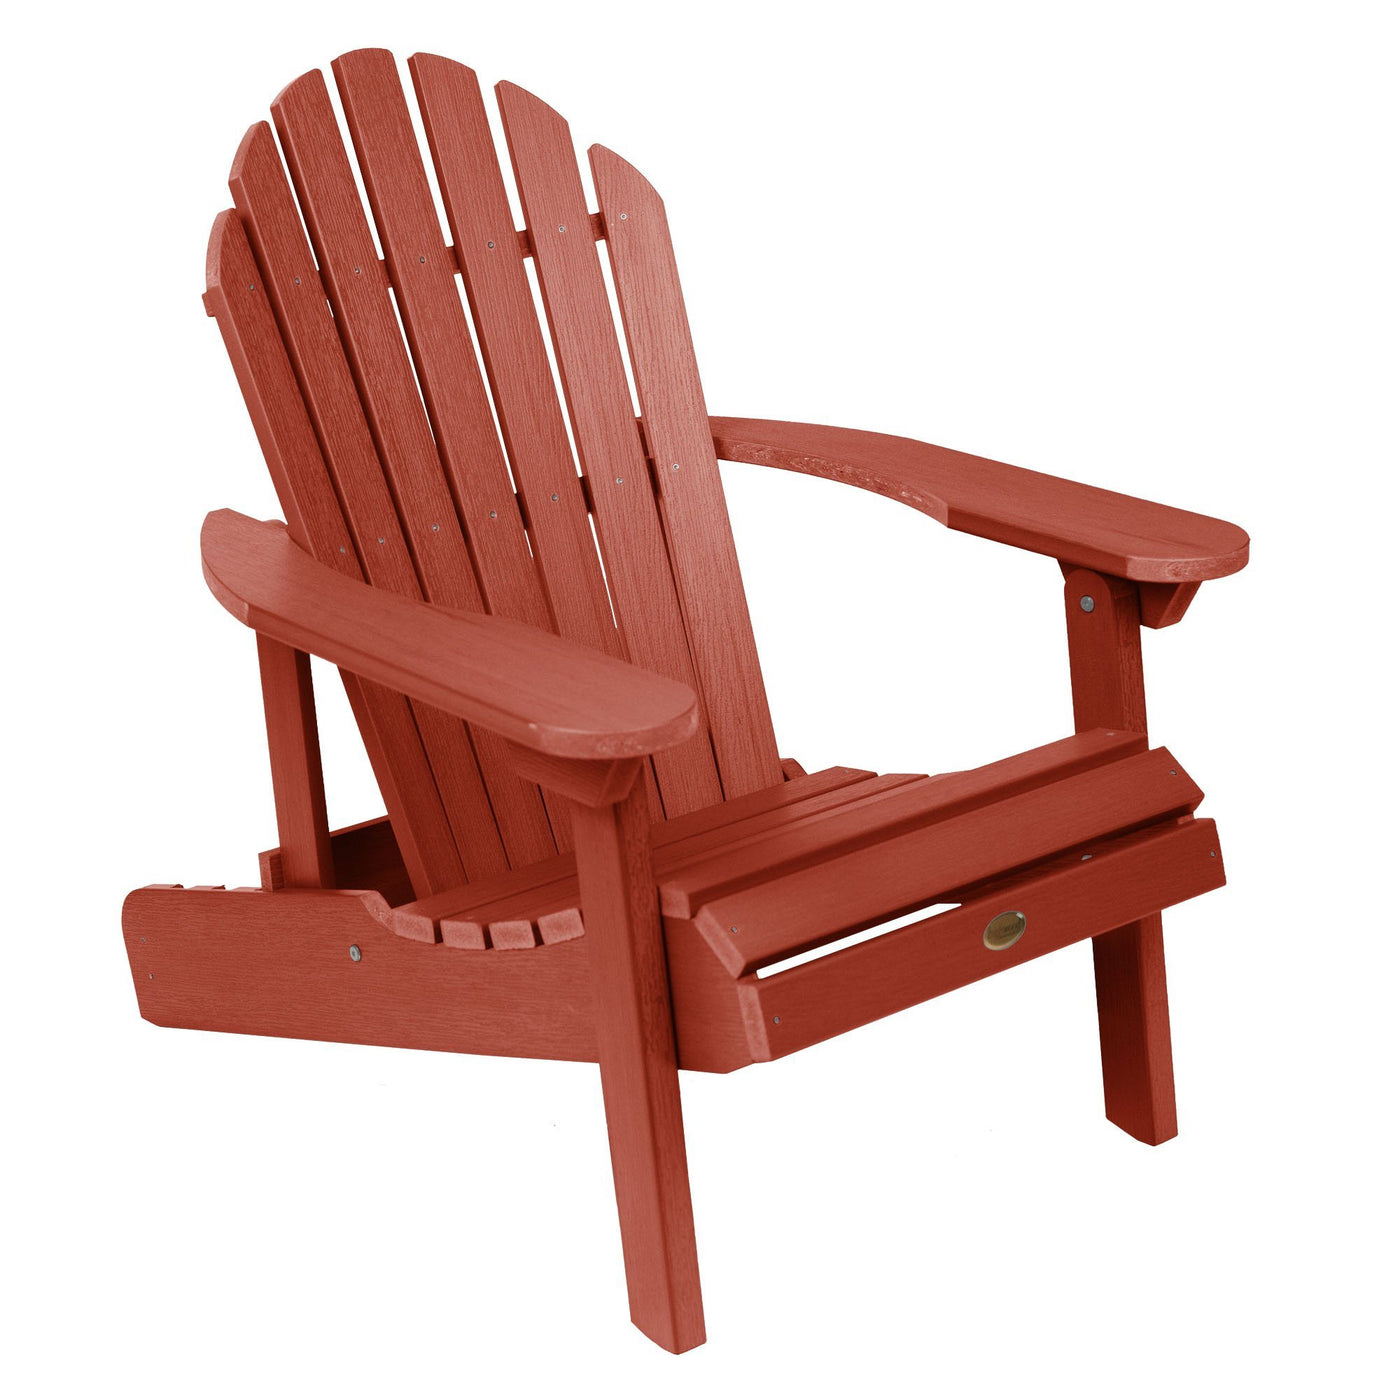 Hamilton Adirondack chair in Rustic Red